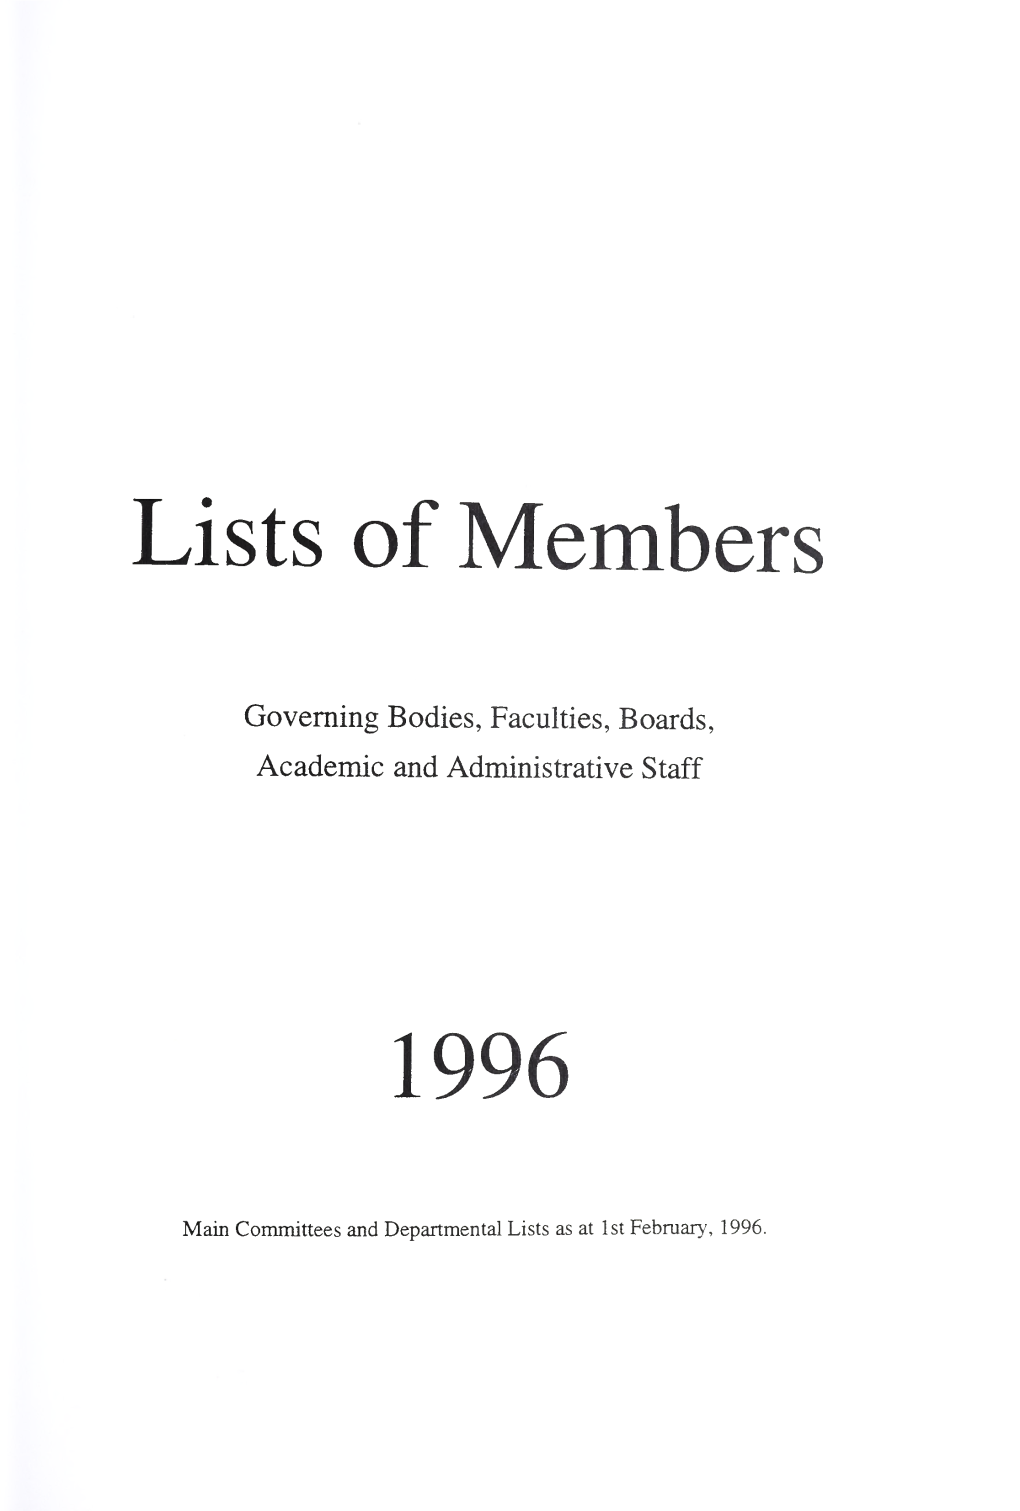 Lists of Members 1996